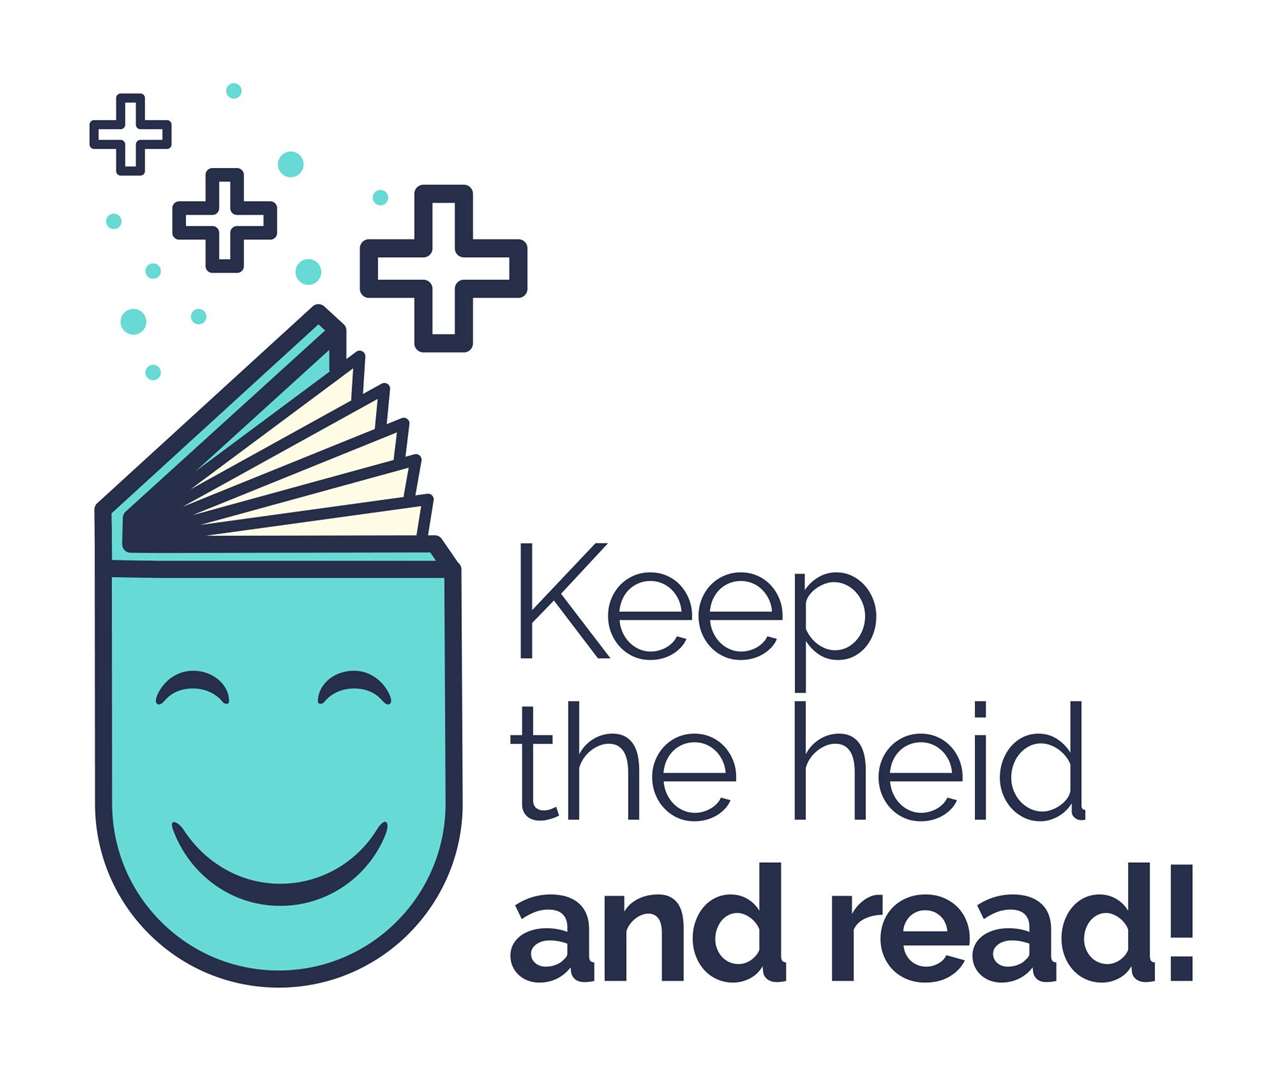 Keep the heid and read.